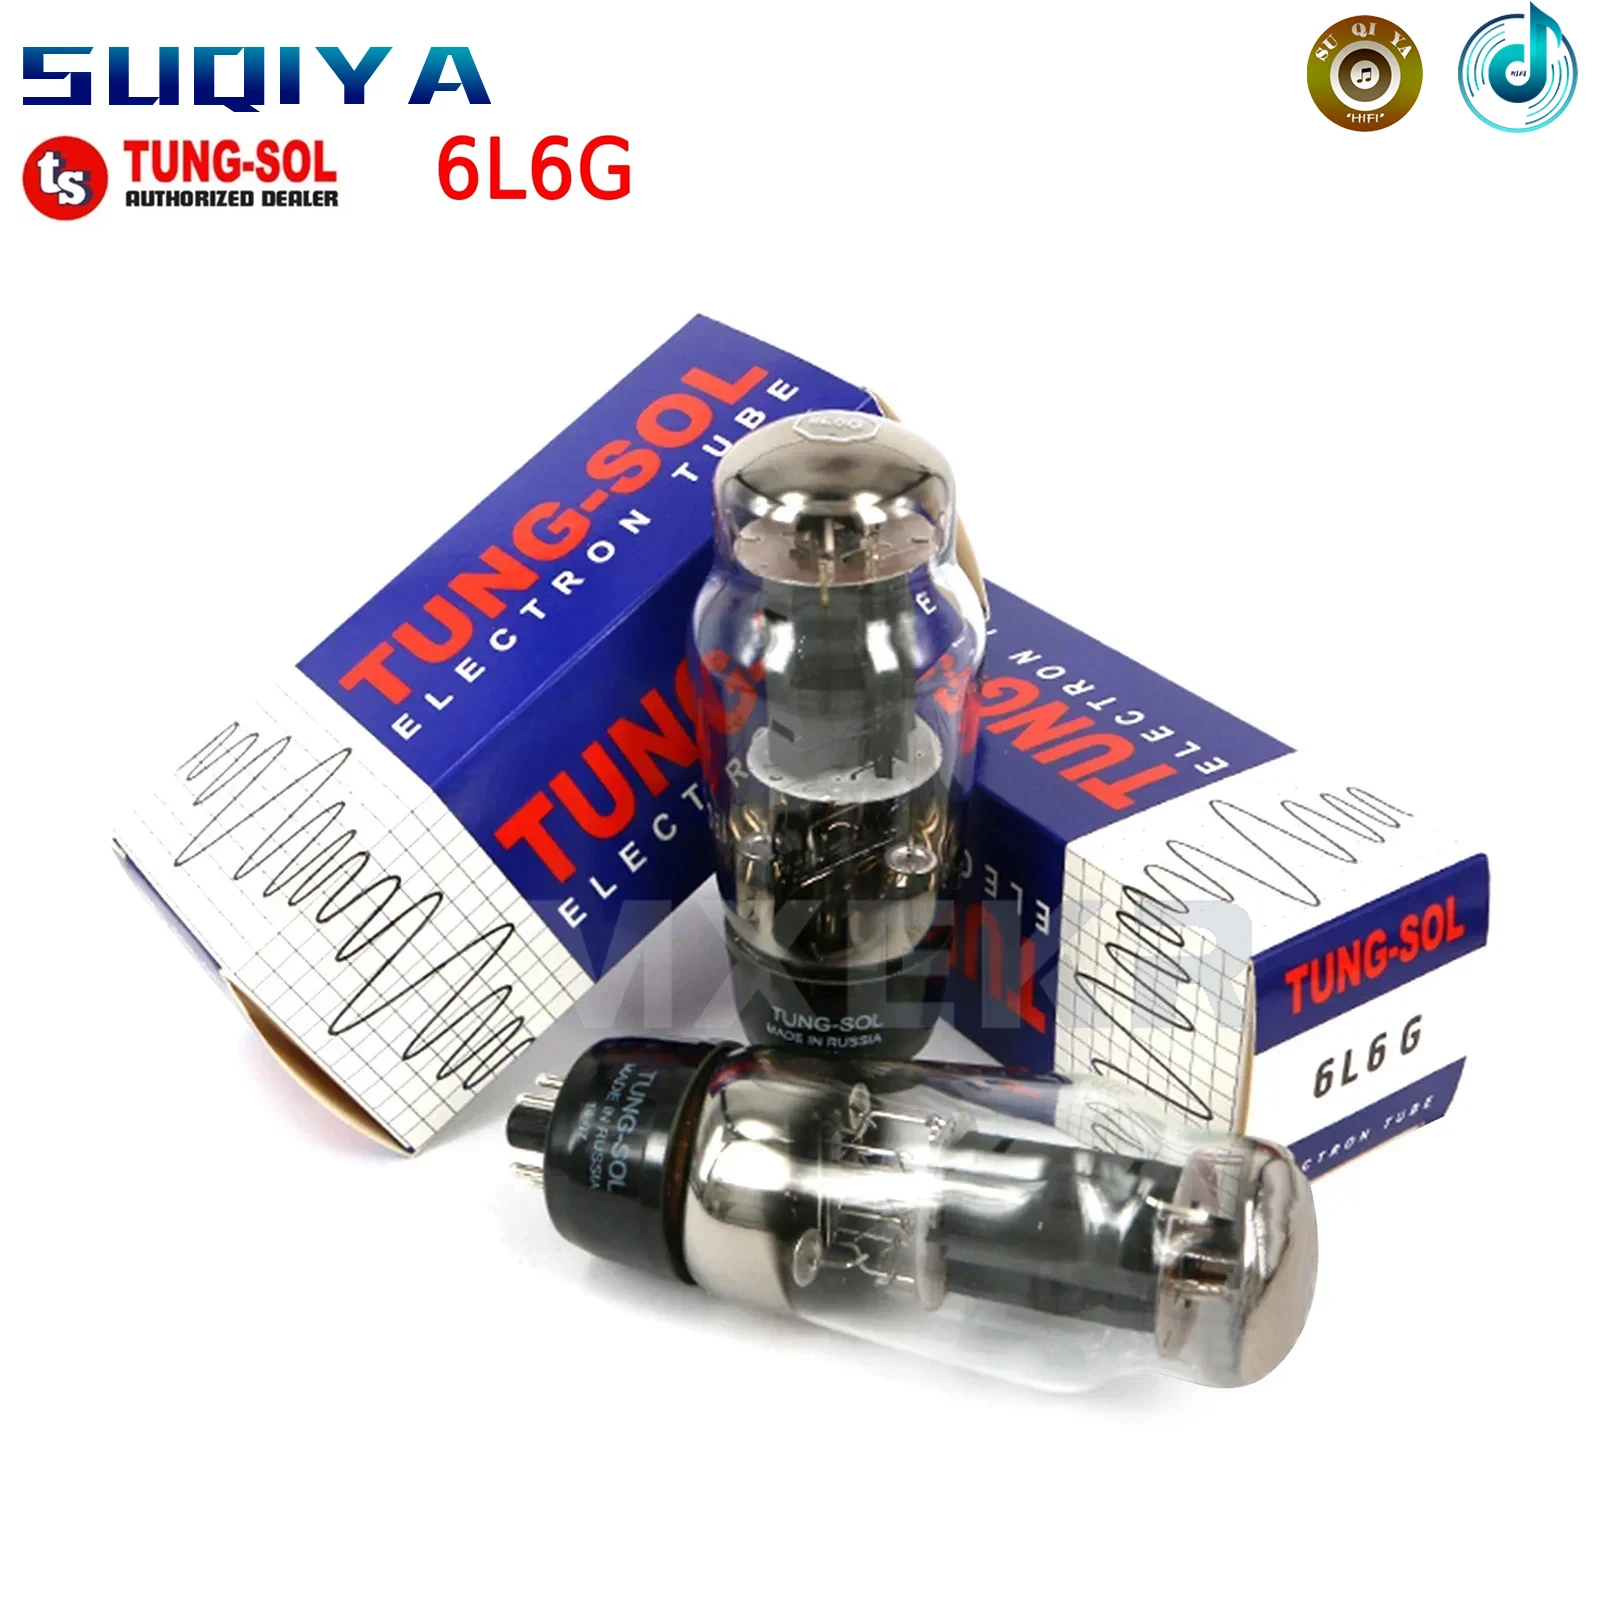 

TUNG-SOL 6L6G 6L6 Vacuum Tube Audio Valve Replaces 5881 6P3P 6L6 Tube Amplifier Kit DIY Amp Factory Test And Match Genuine